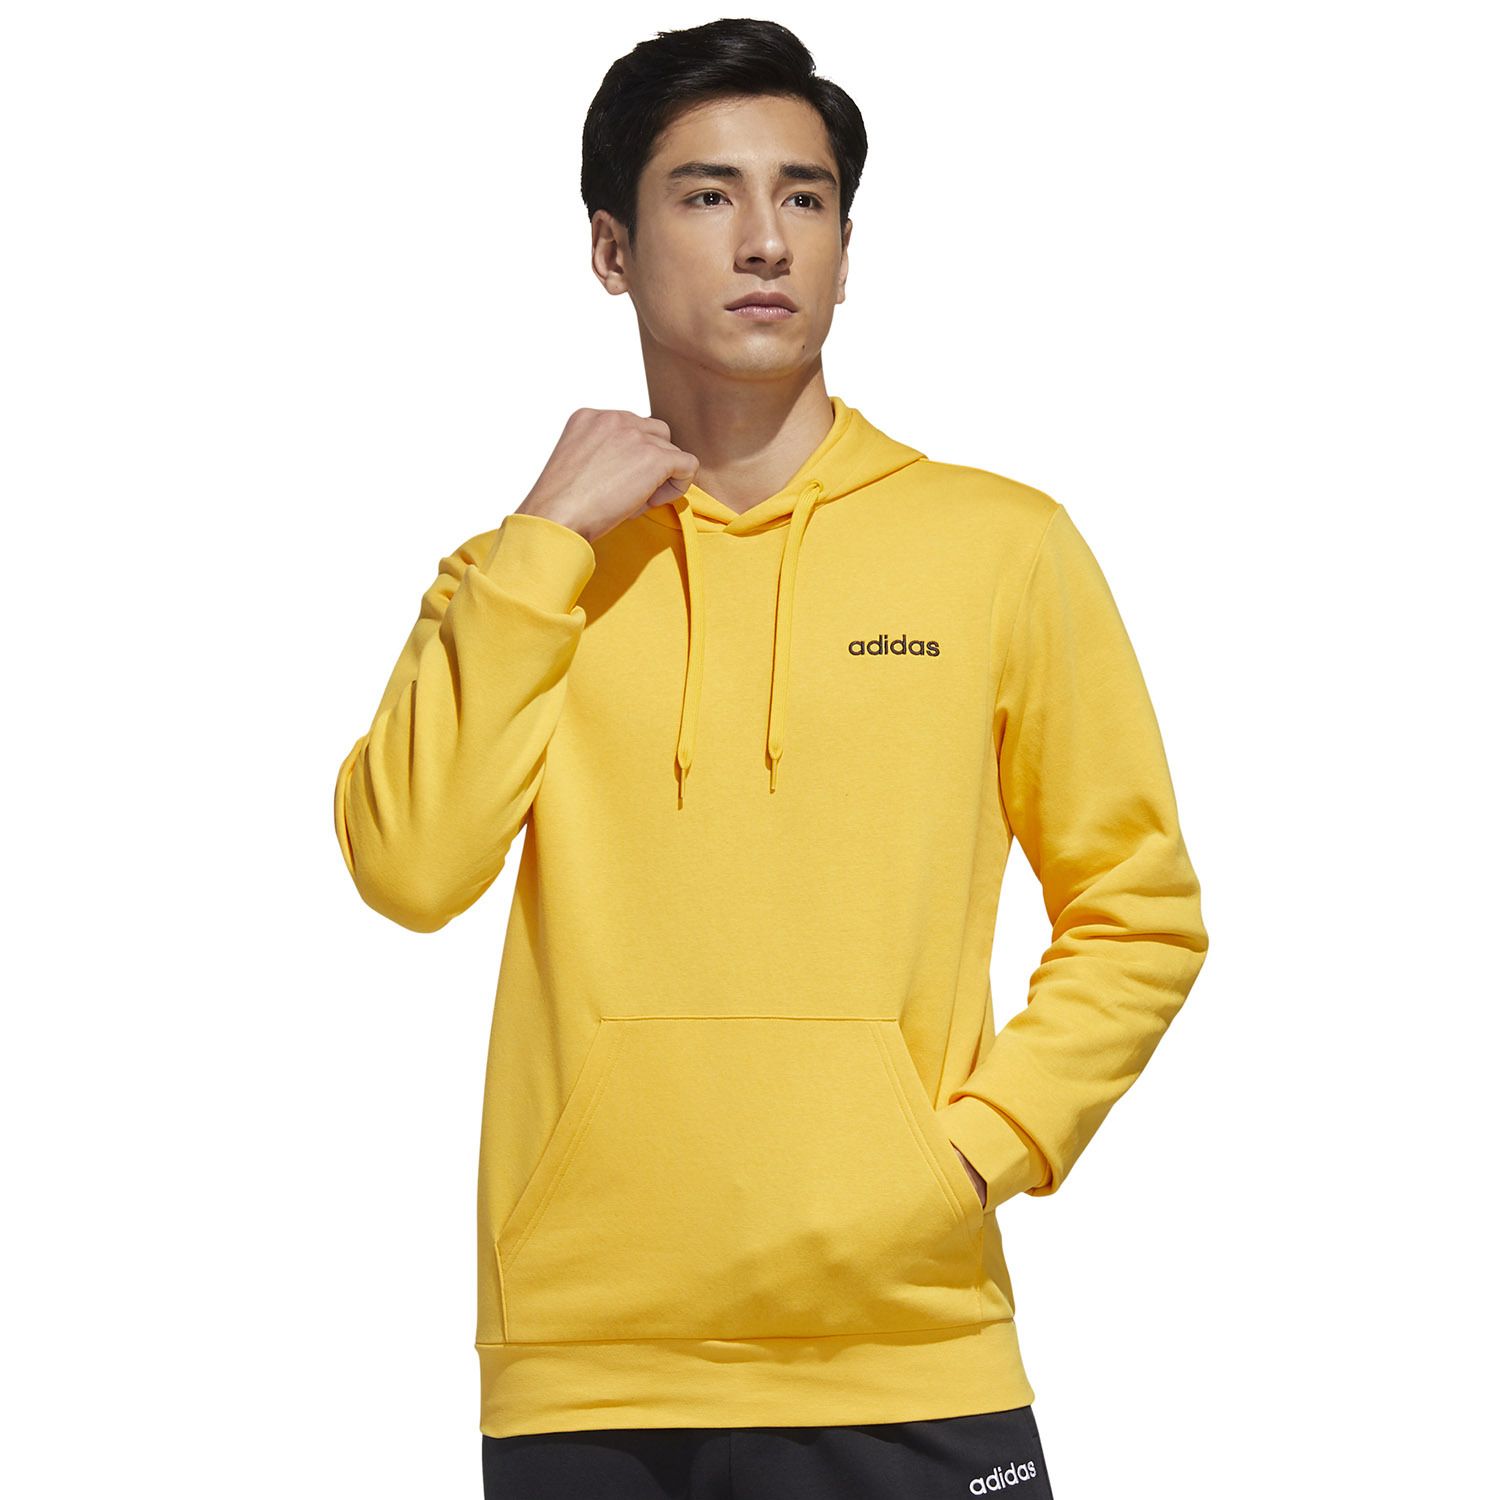 adidas yellow and black hoodie